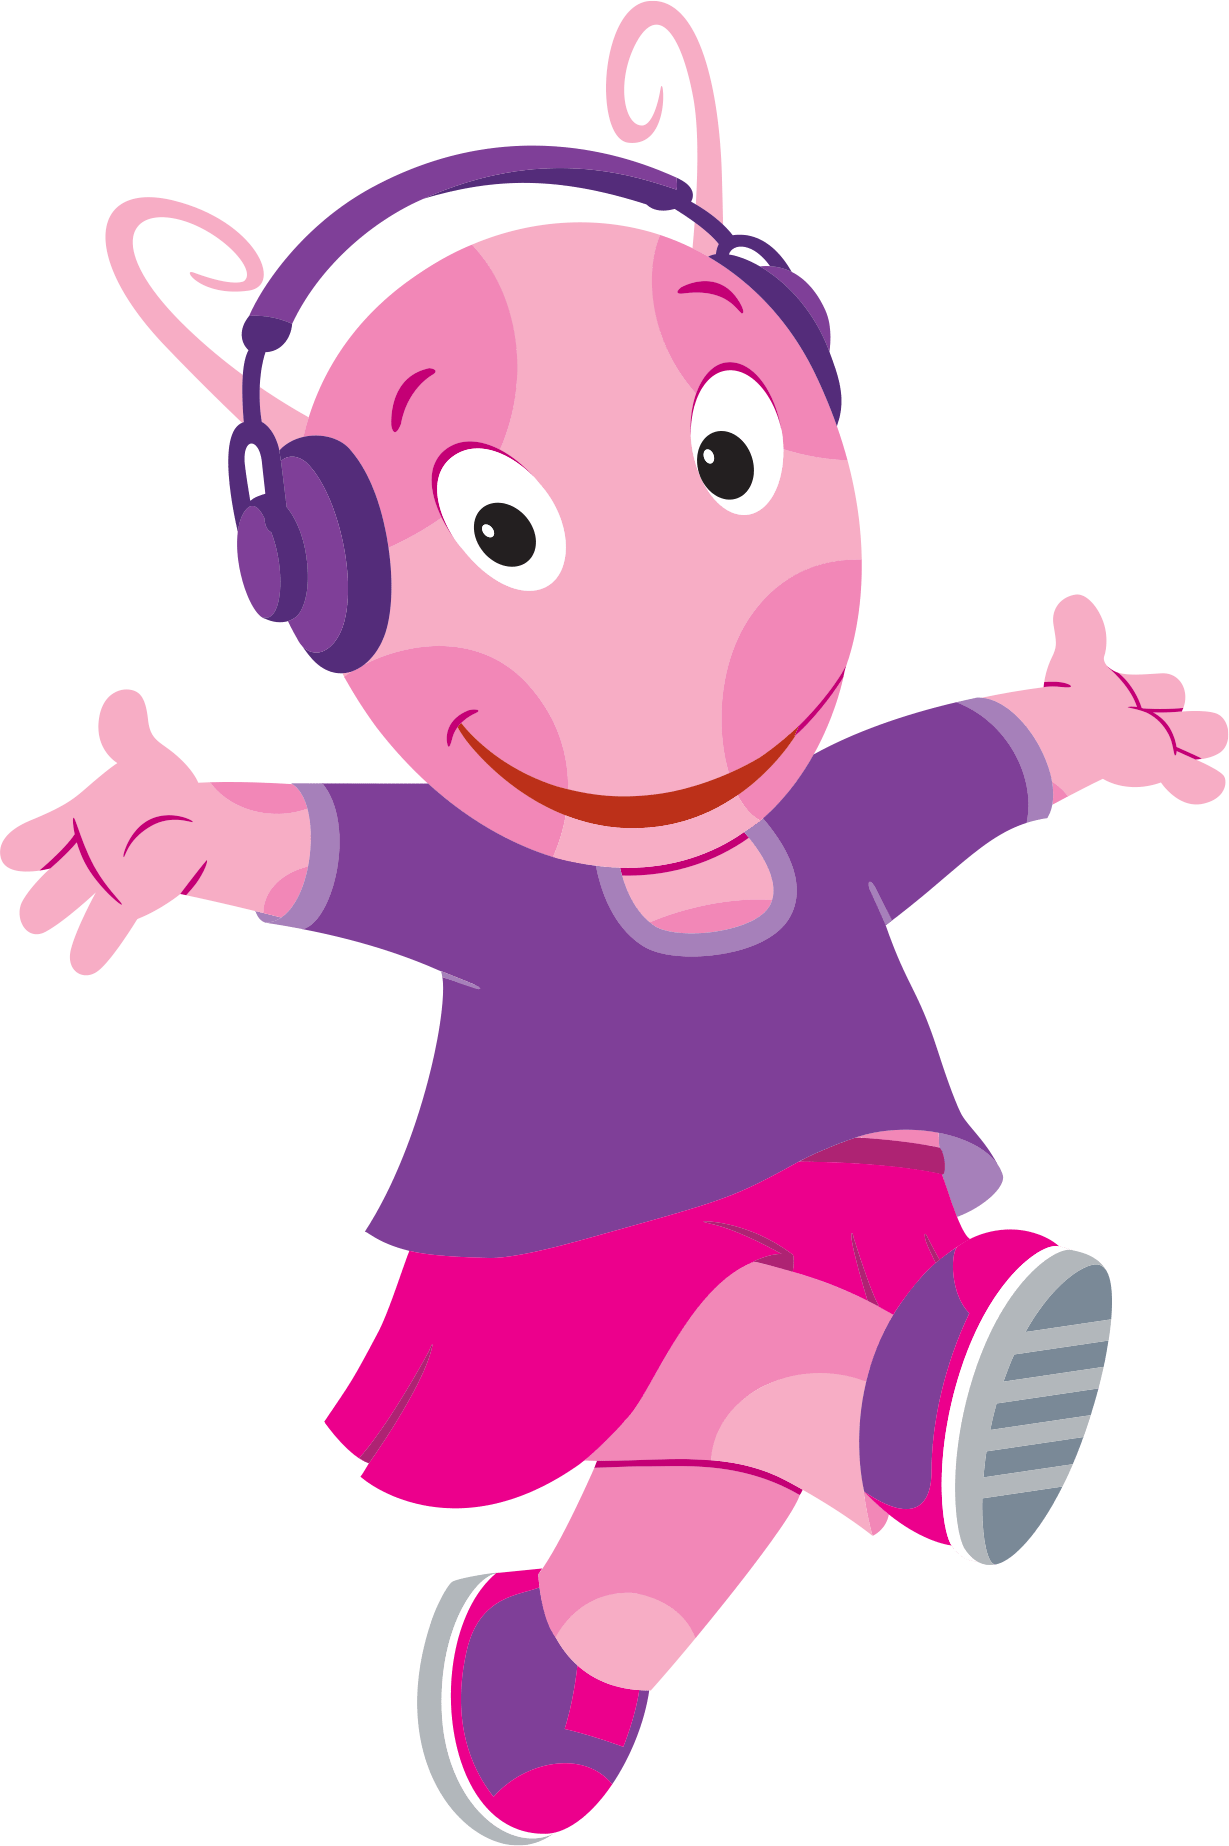 Happy Dancing Cartoon Character PNG image